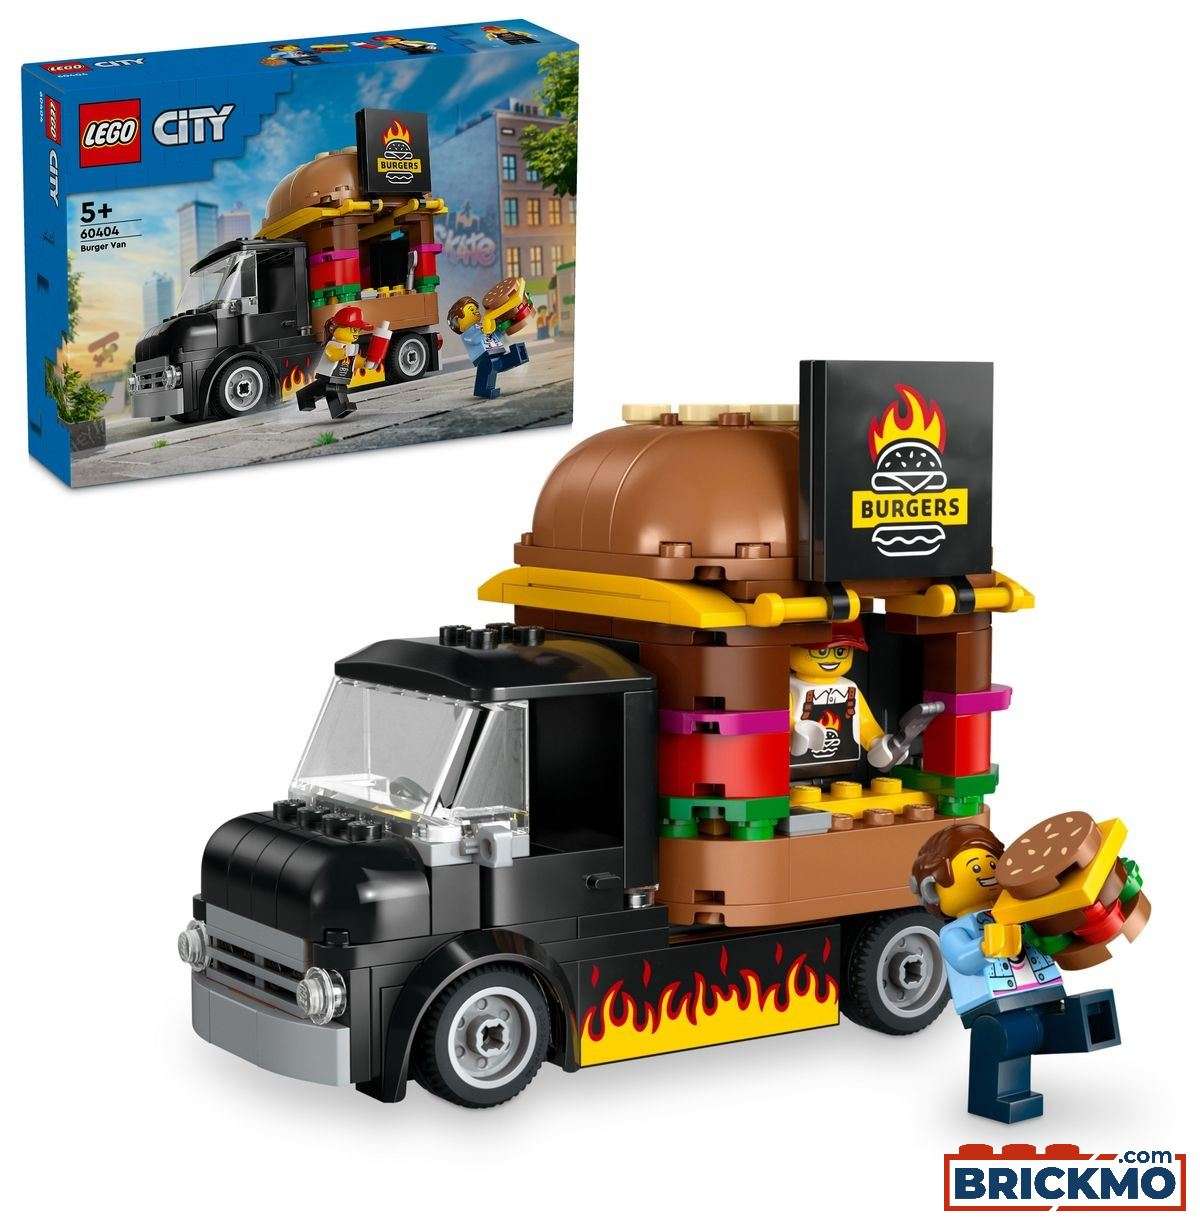 LEGO City 60404 Furgone degli hamburger 60404